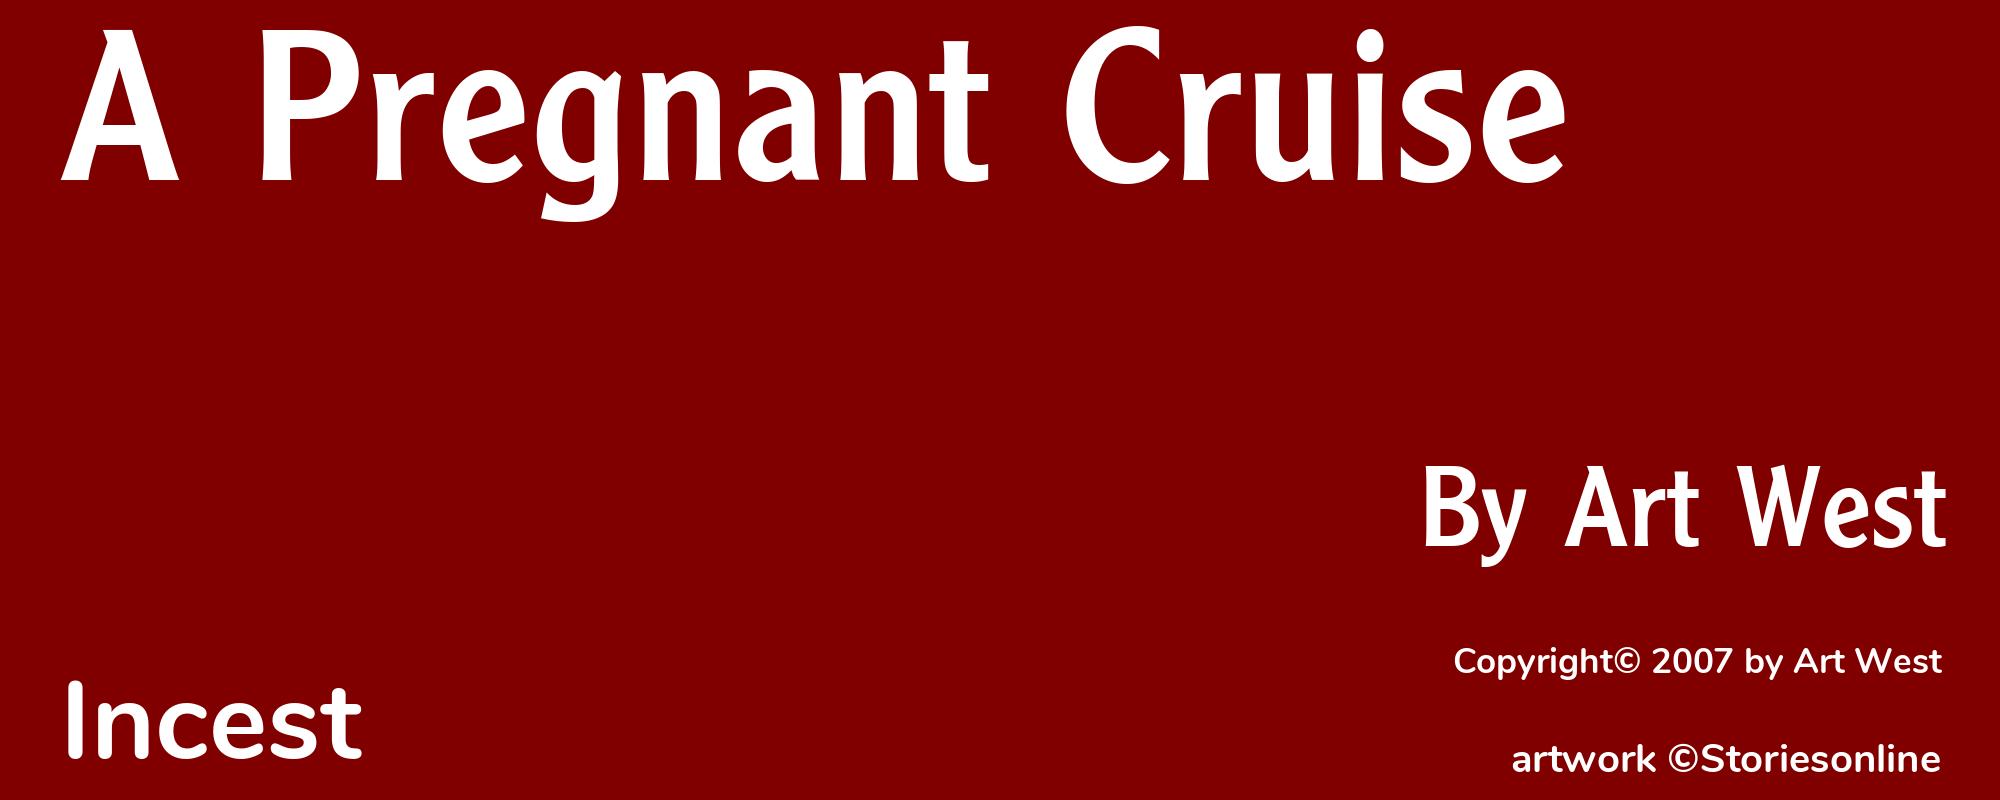 A Pregnant Cruise - Cover